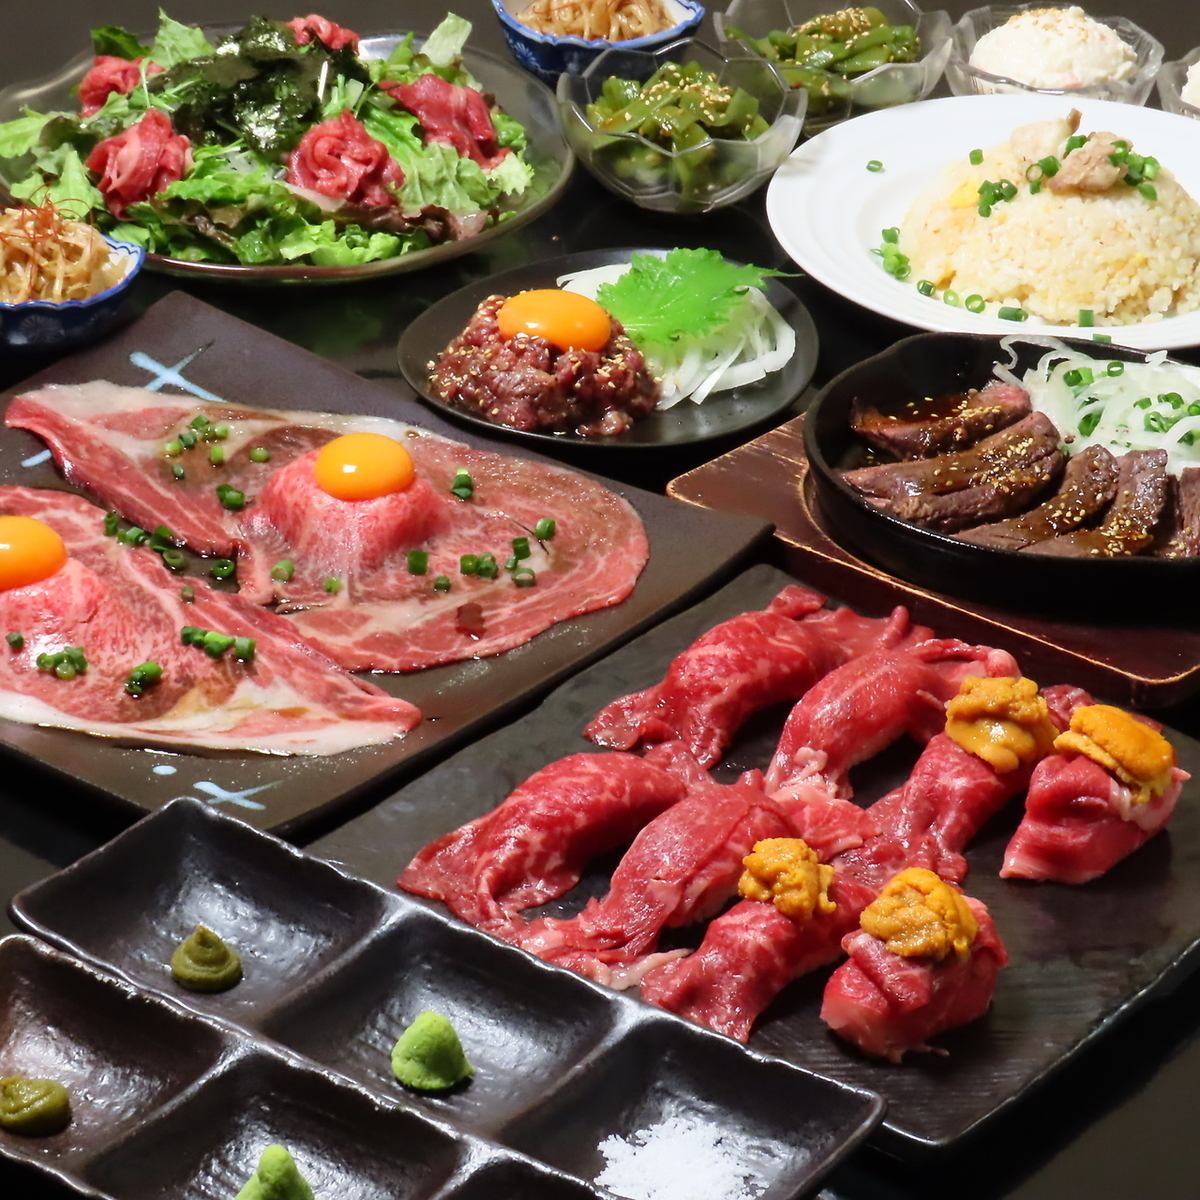 Enjoy the luxury of carefully selected Kuroge Wagyu beef and seafood "Extreme course" 7,000 yen